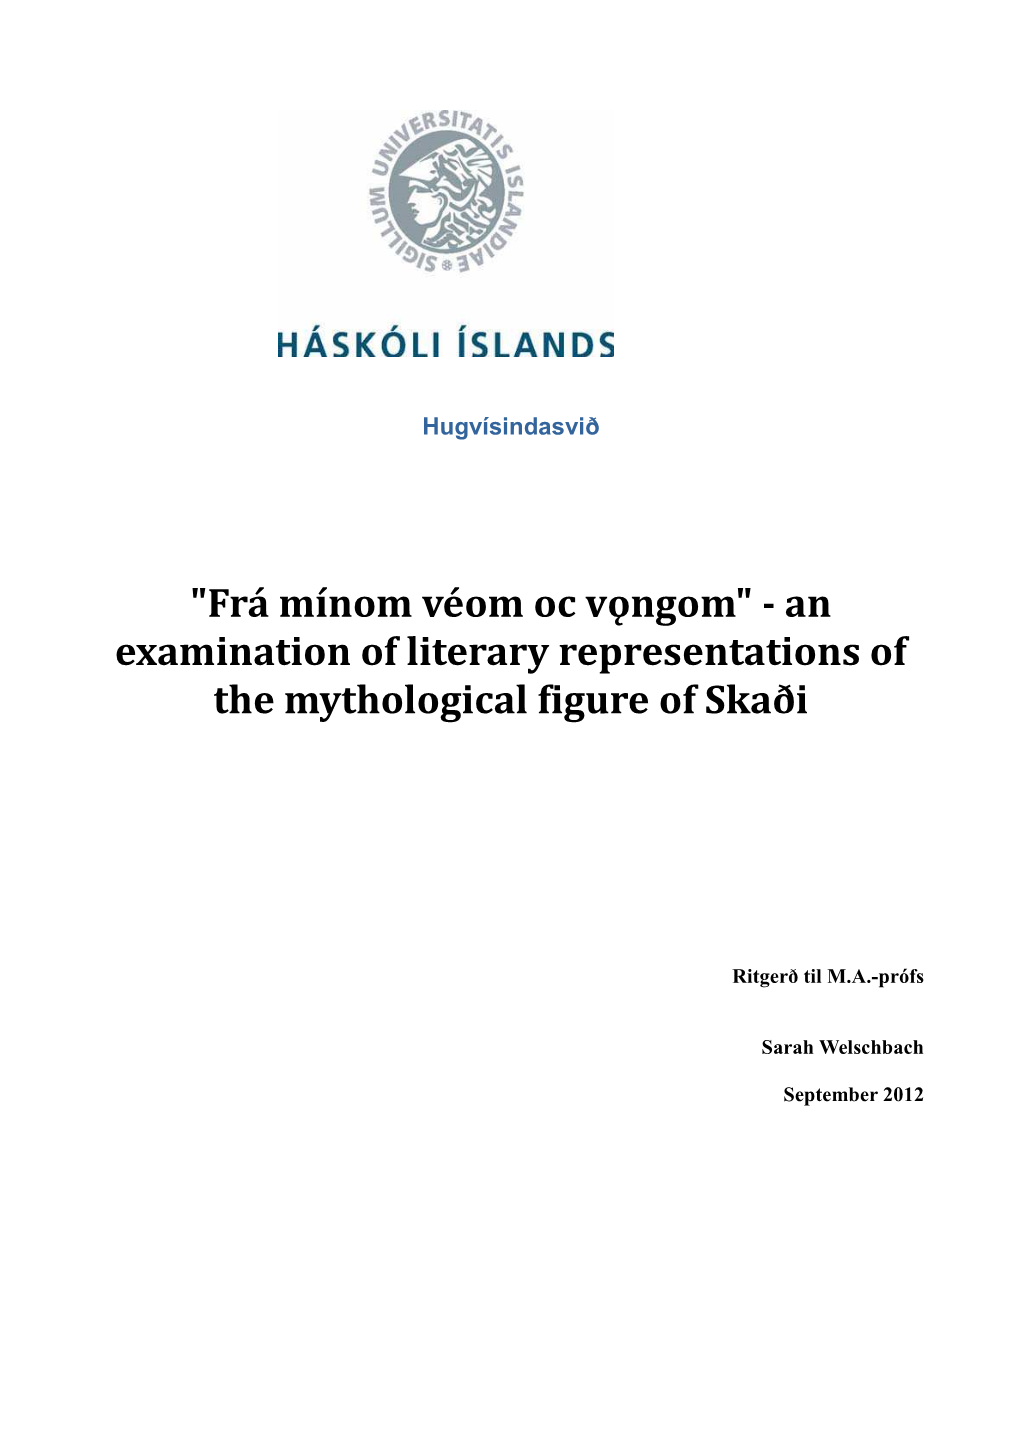 "Frá Mínom Véom Oc Vǫngom" - an Examination of Literary Representations of the Mythological Figure of Skaði